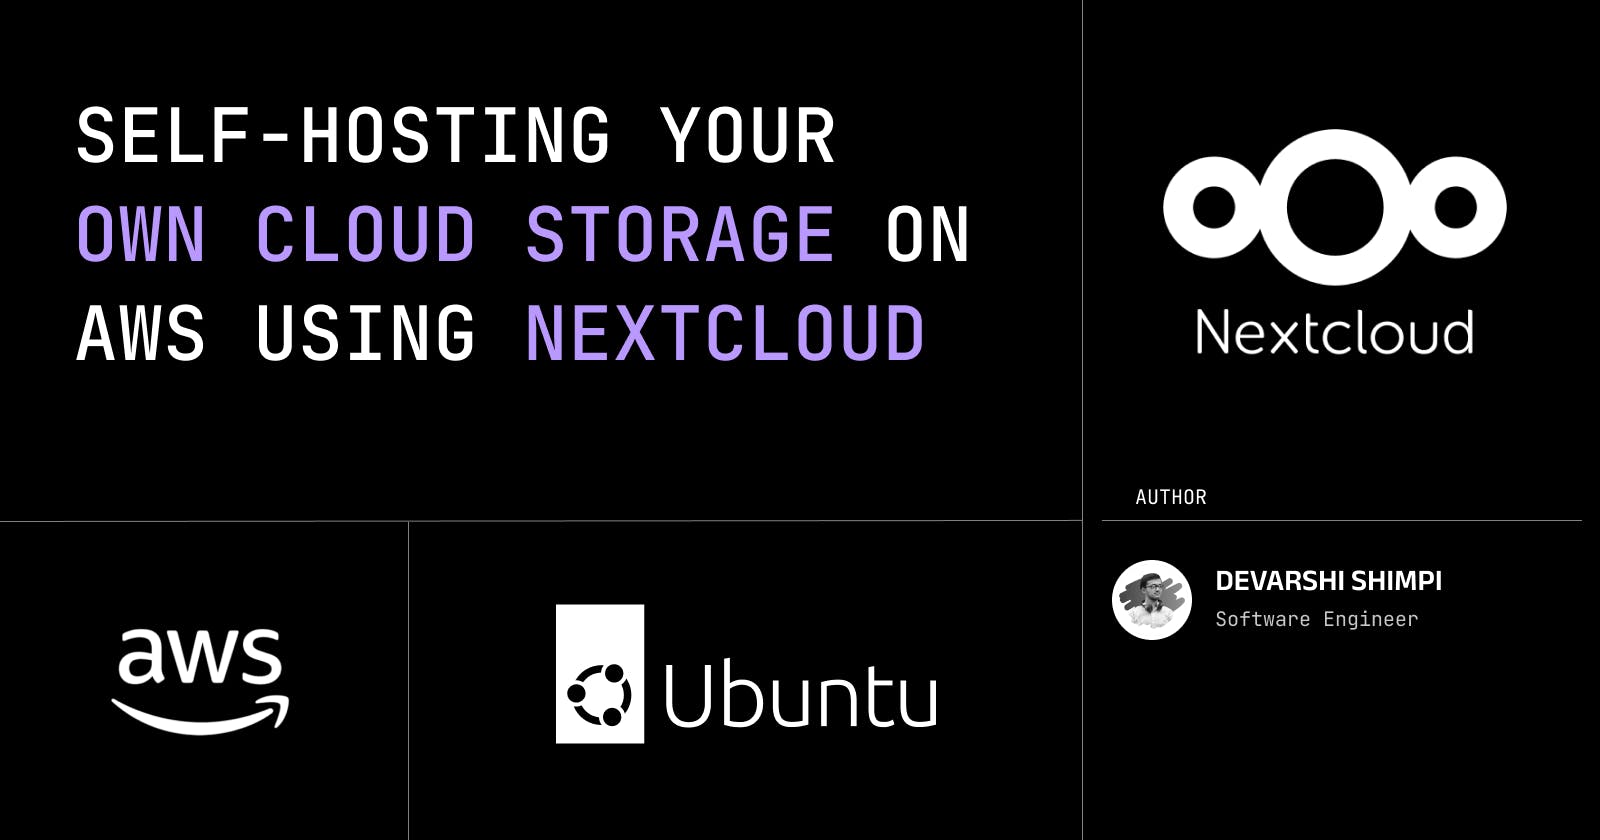 Self-Hosting Your Own Cloud Storage on AWS using NextCloud